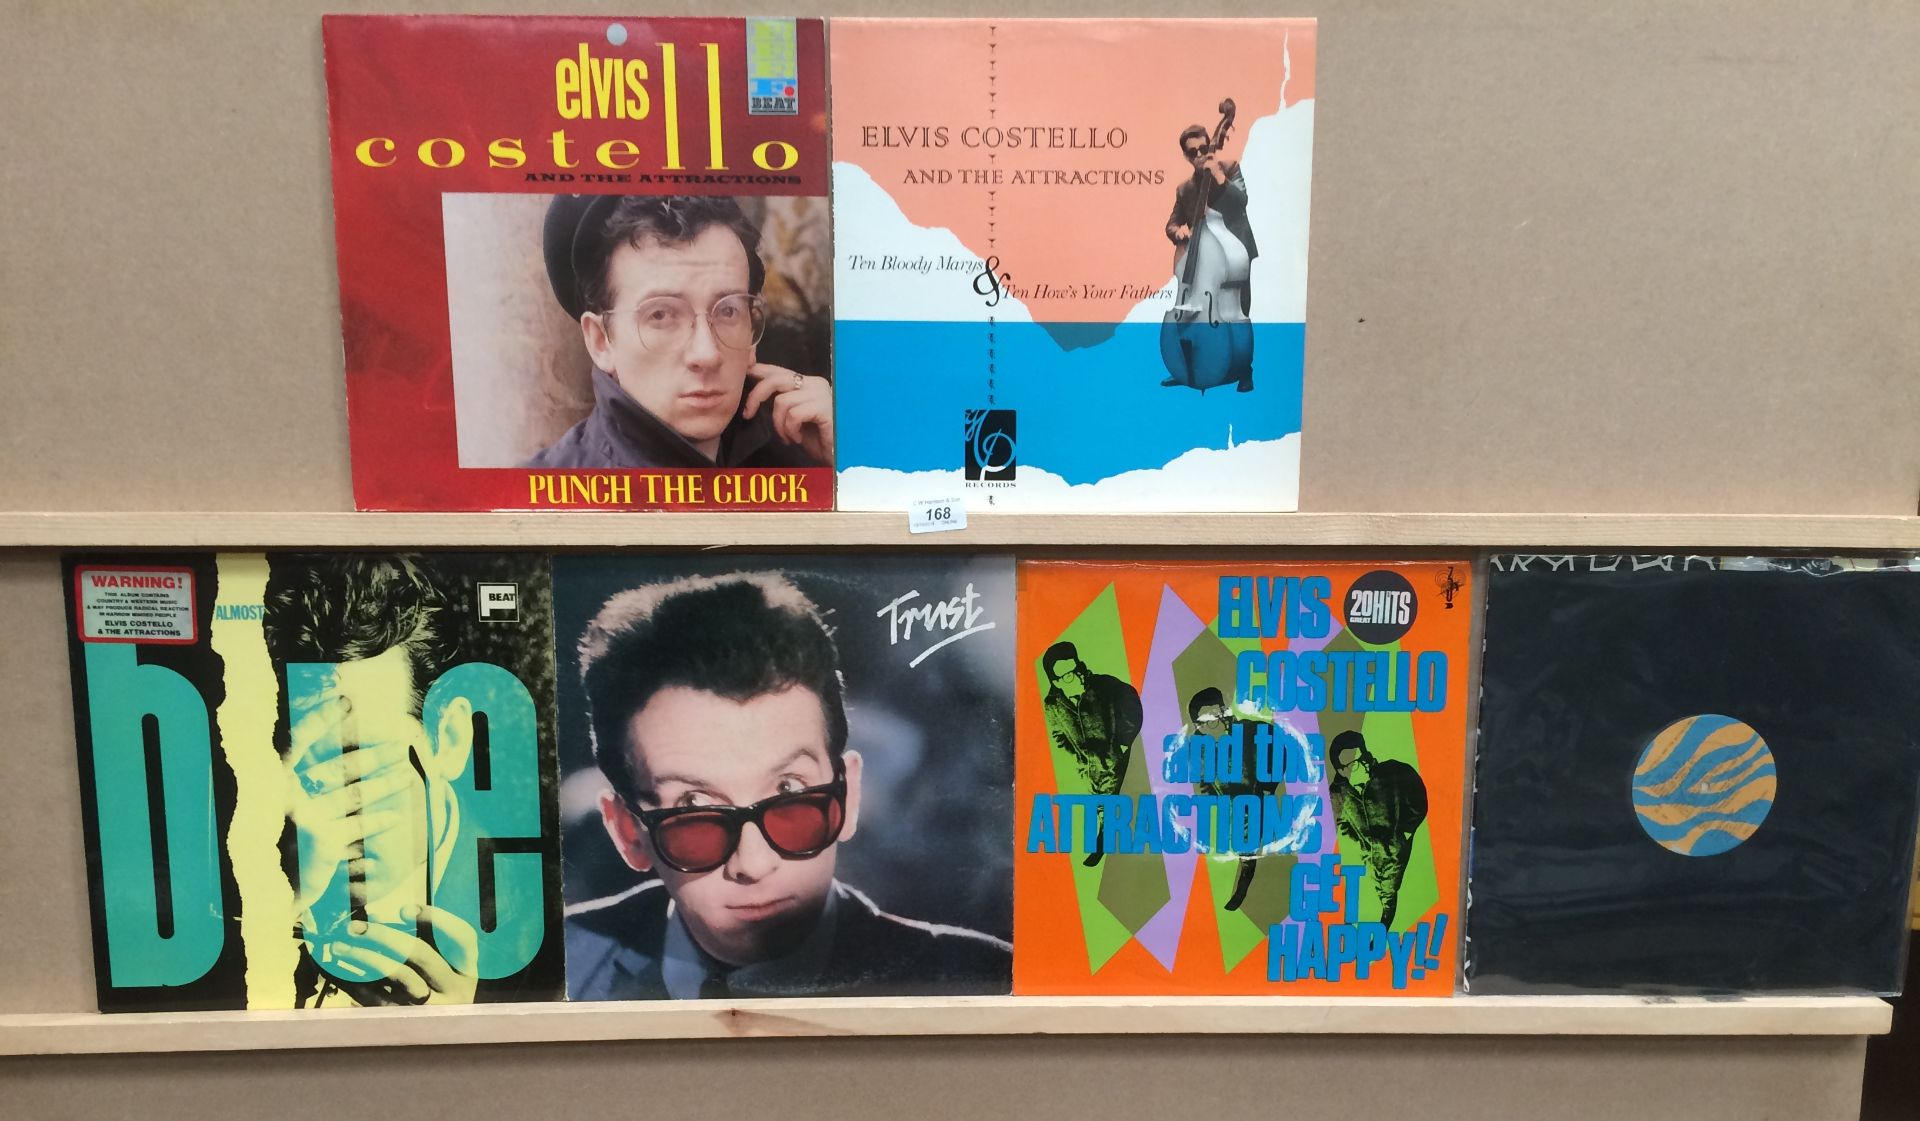 Five 12" vinyl records by Elvis Costello